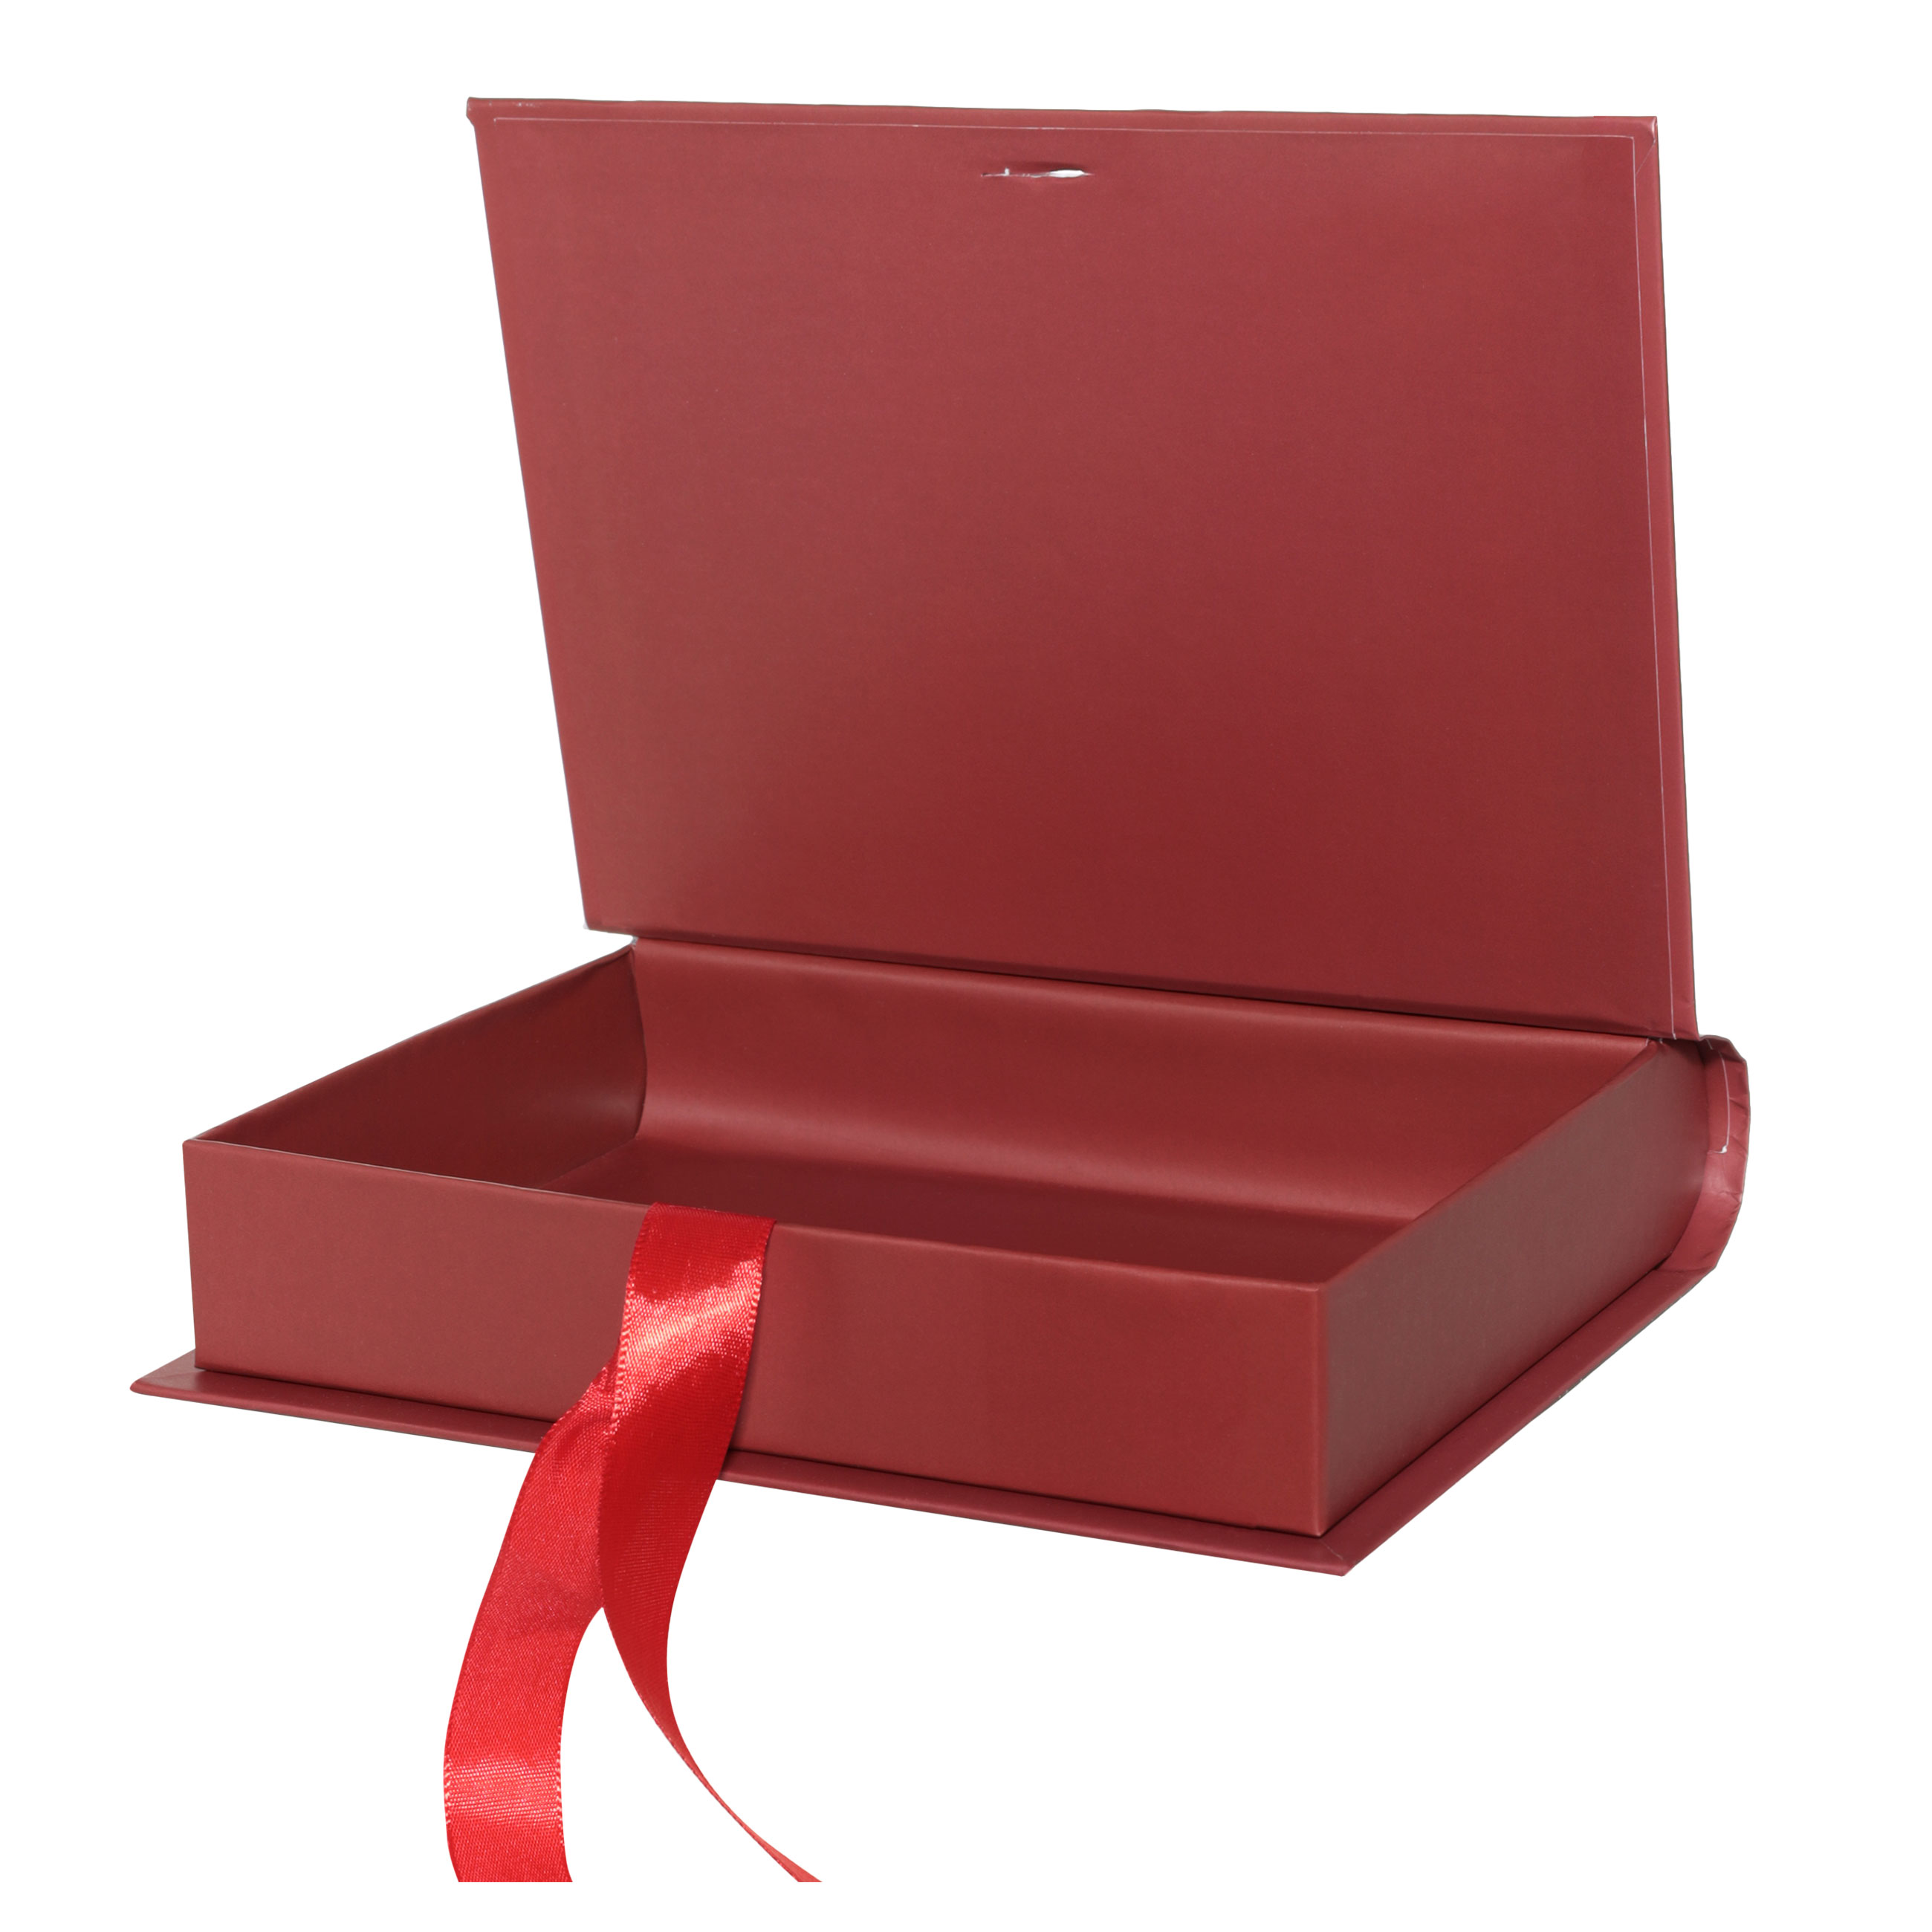 Коробка с конфетами, 18х22 см, 306 гр, красная, Ассорти, Книга, Christmas